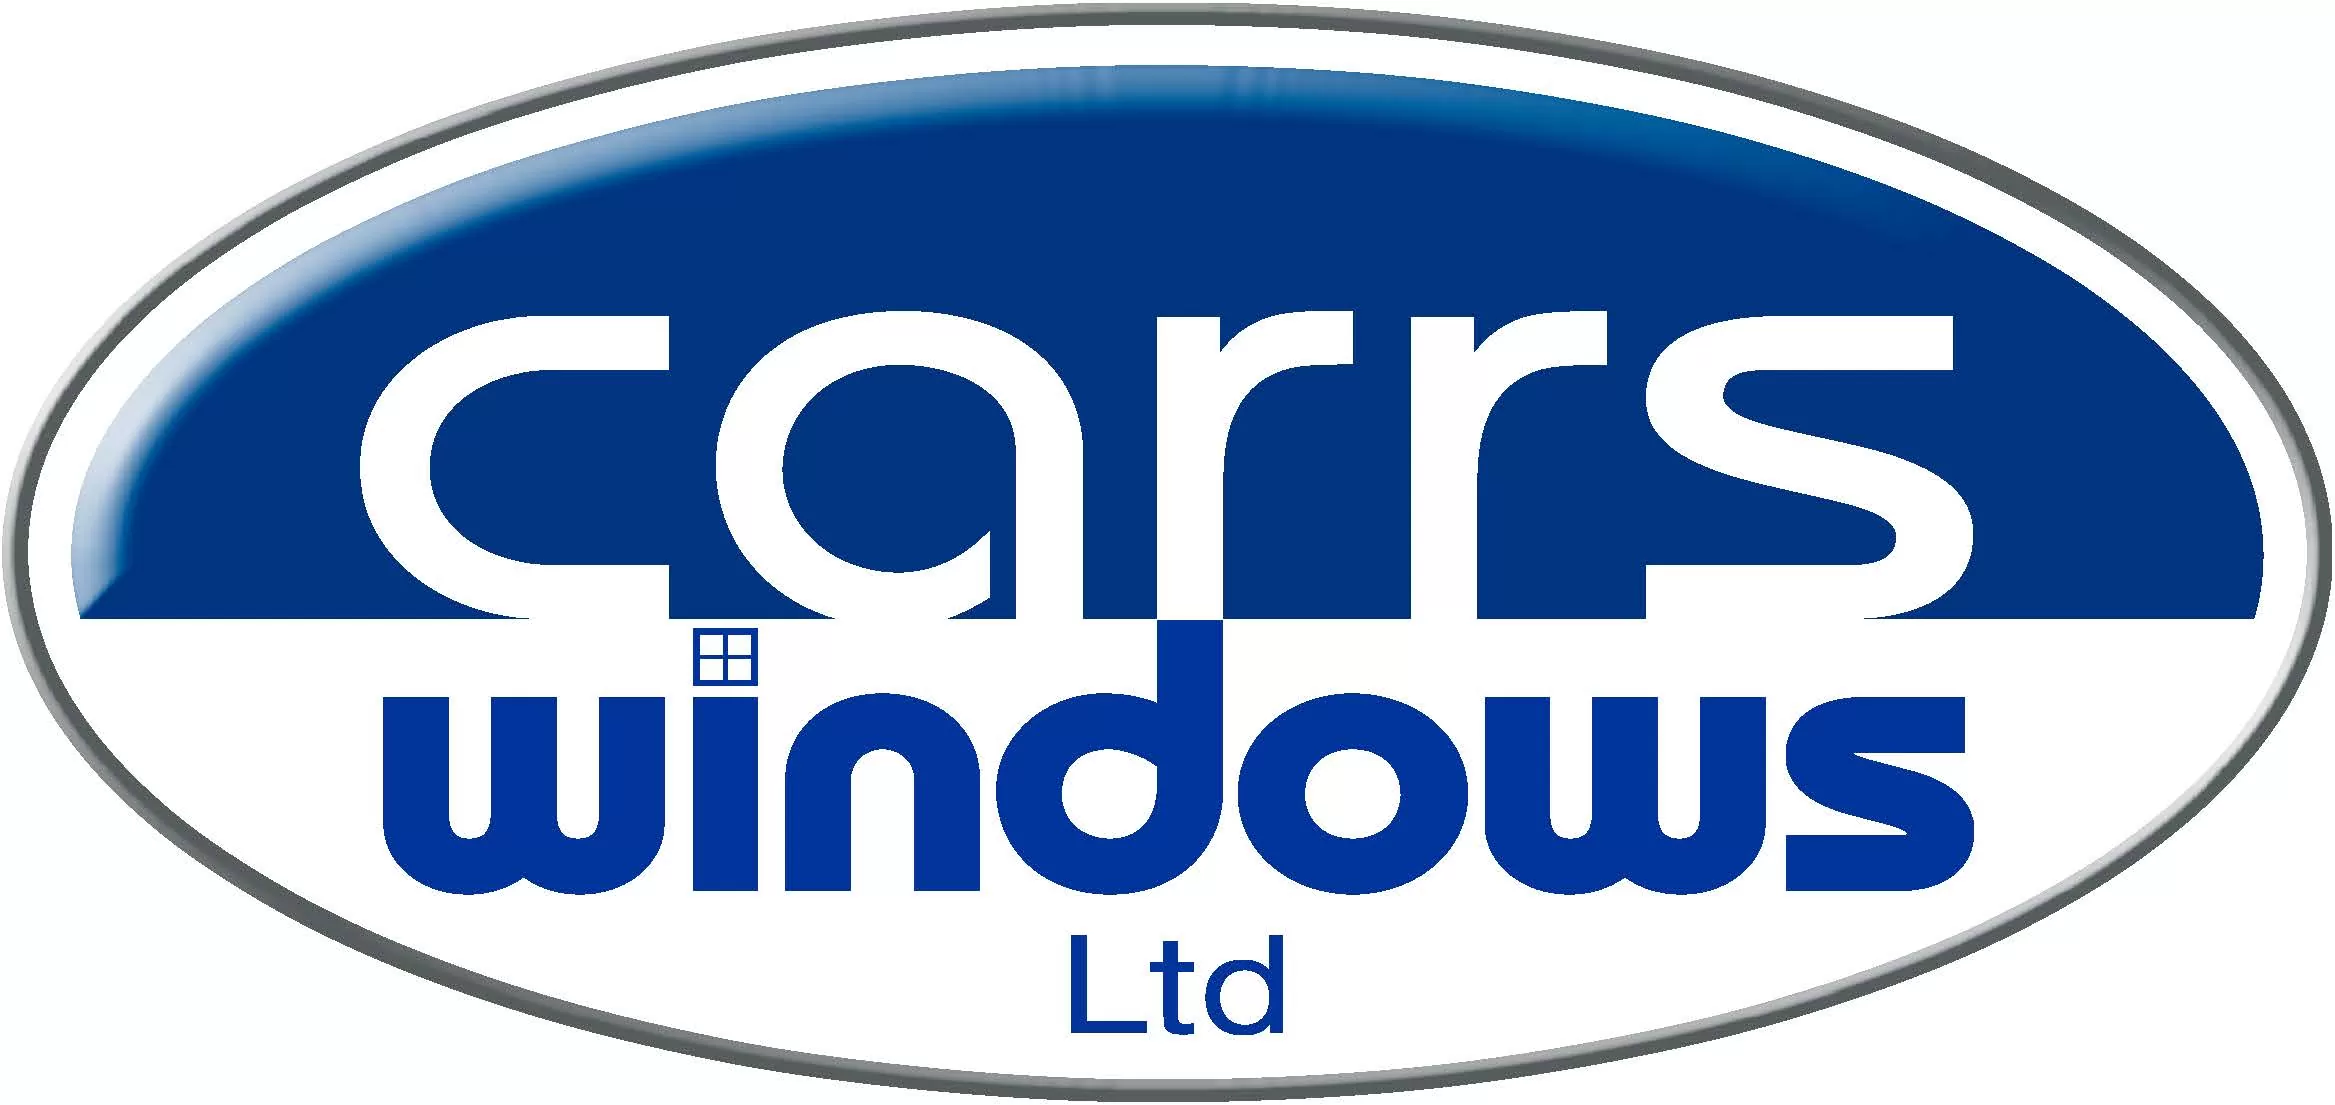 Carrs Windows Ltd logo